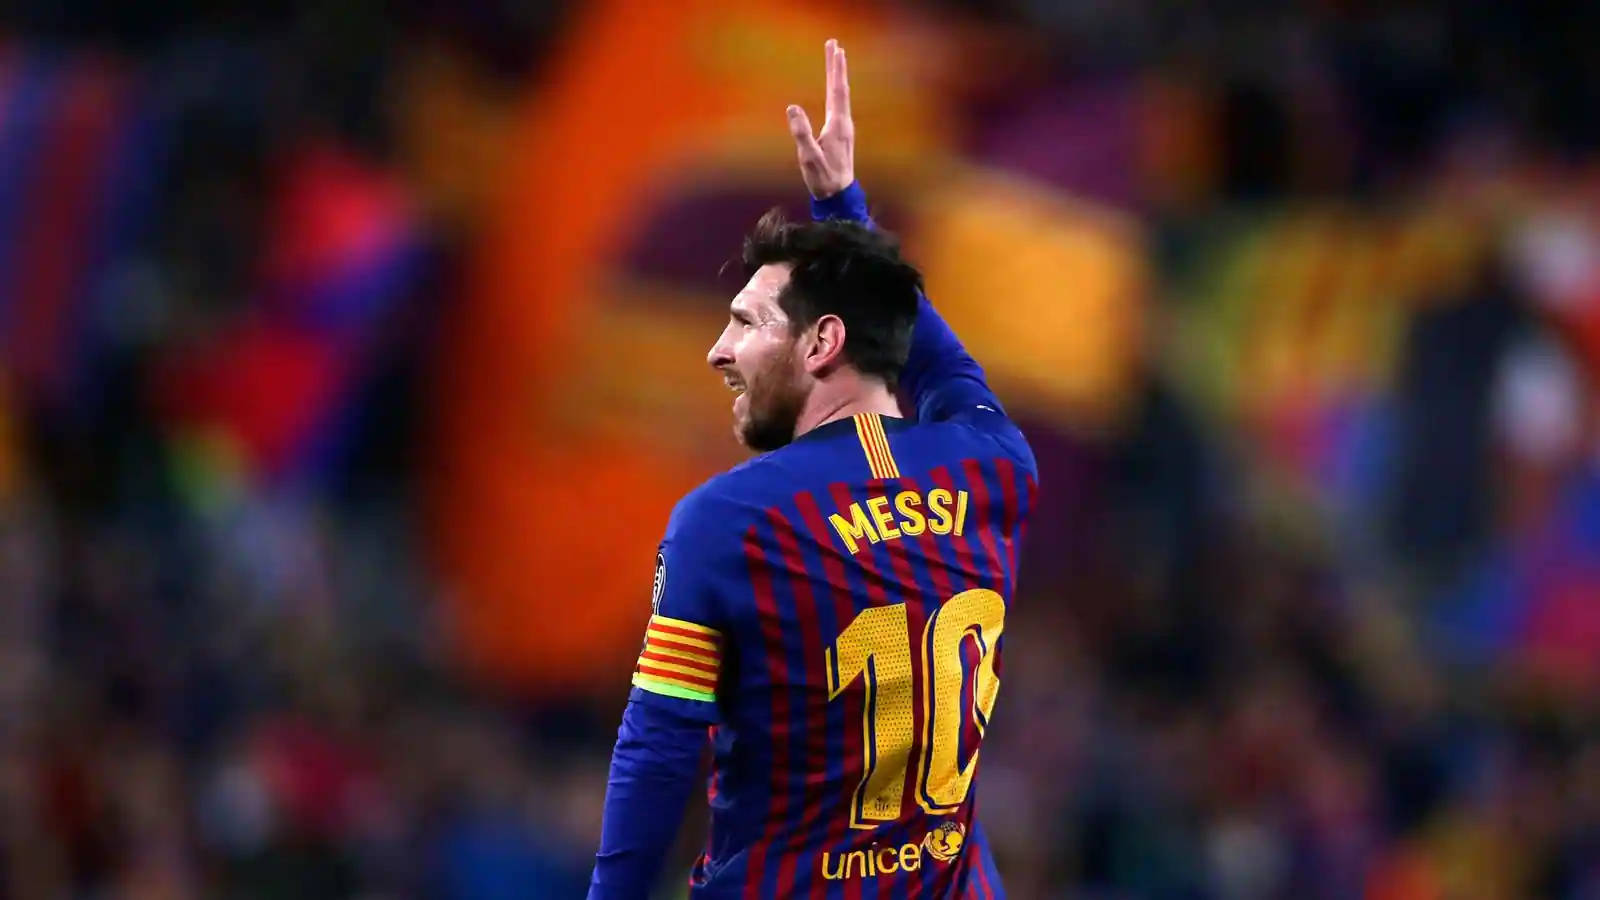 Messi2021 Hand Hoch Wallpaper